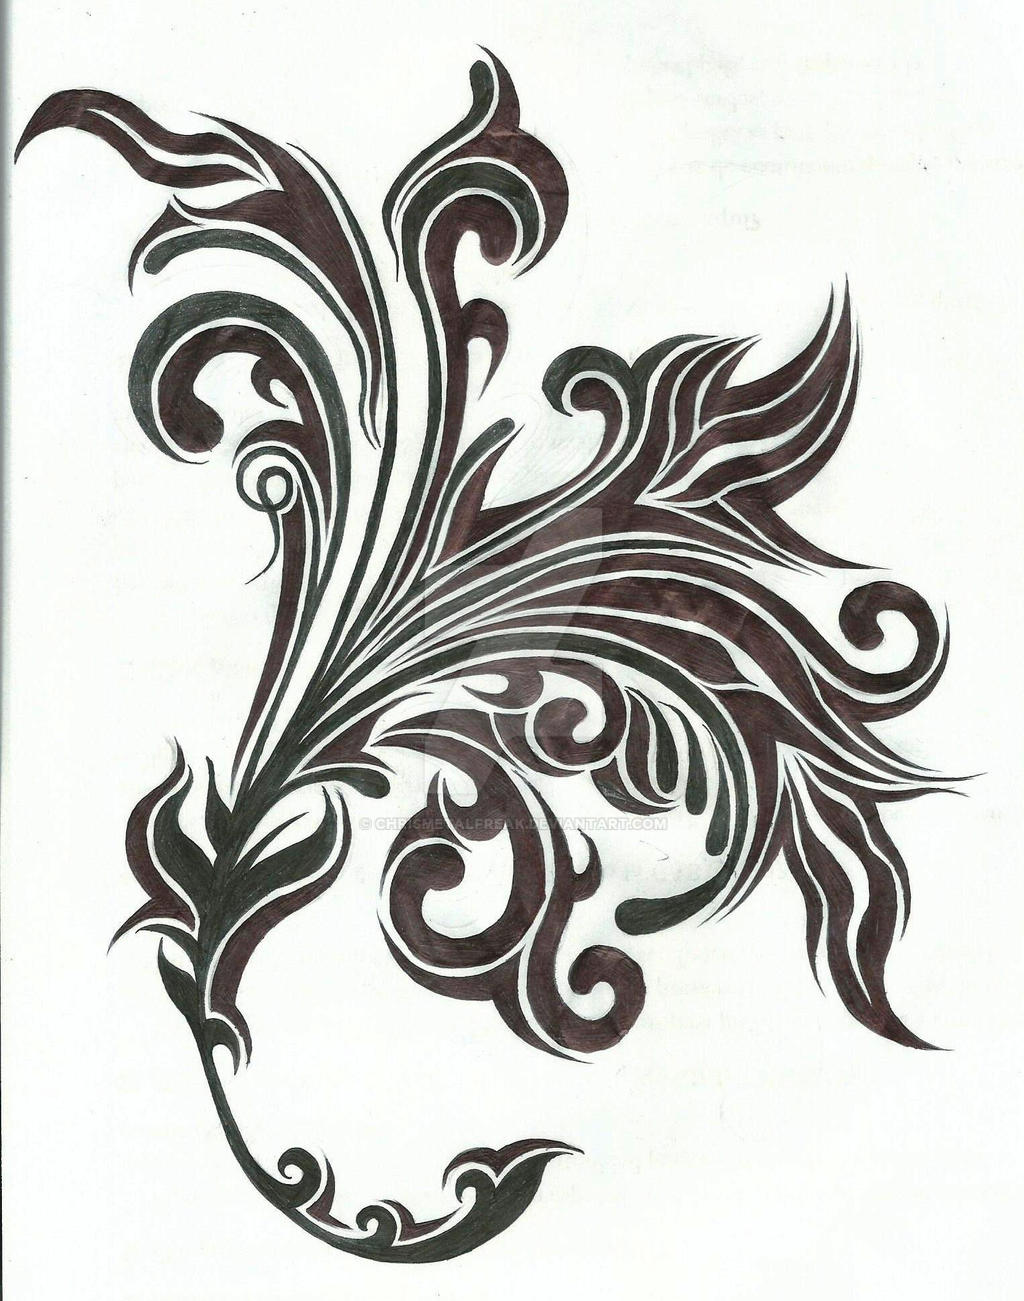 Tribal Flower and Vine Tattoo Design by chrismetalfreak on DeviantArt